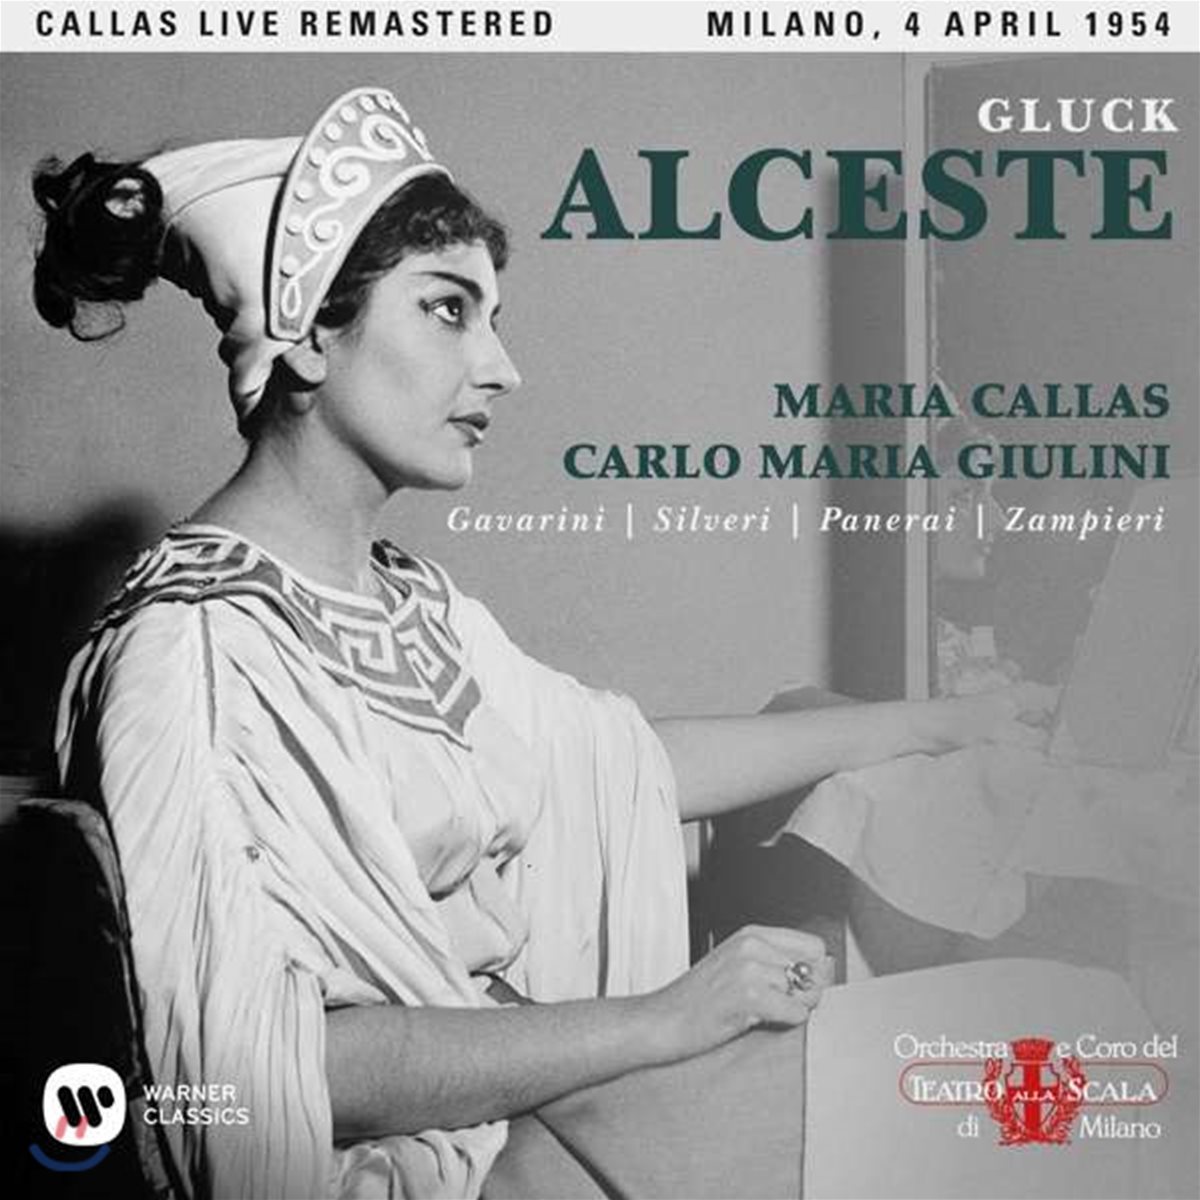 Maria Callas / Carlo Maria Giulini 글룩: 알체스테 - 마리아 칼라스, 카를로 마리아 줄리니 / 1954년 밀라노 라 스칼라 실황 (Gluck: Alceste)